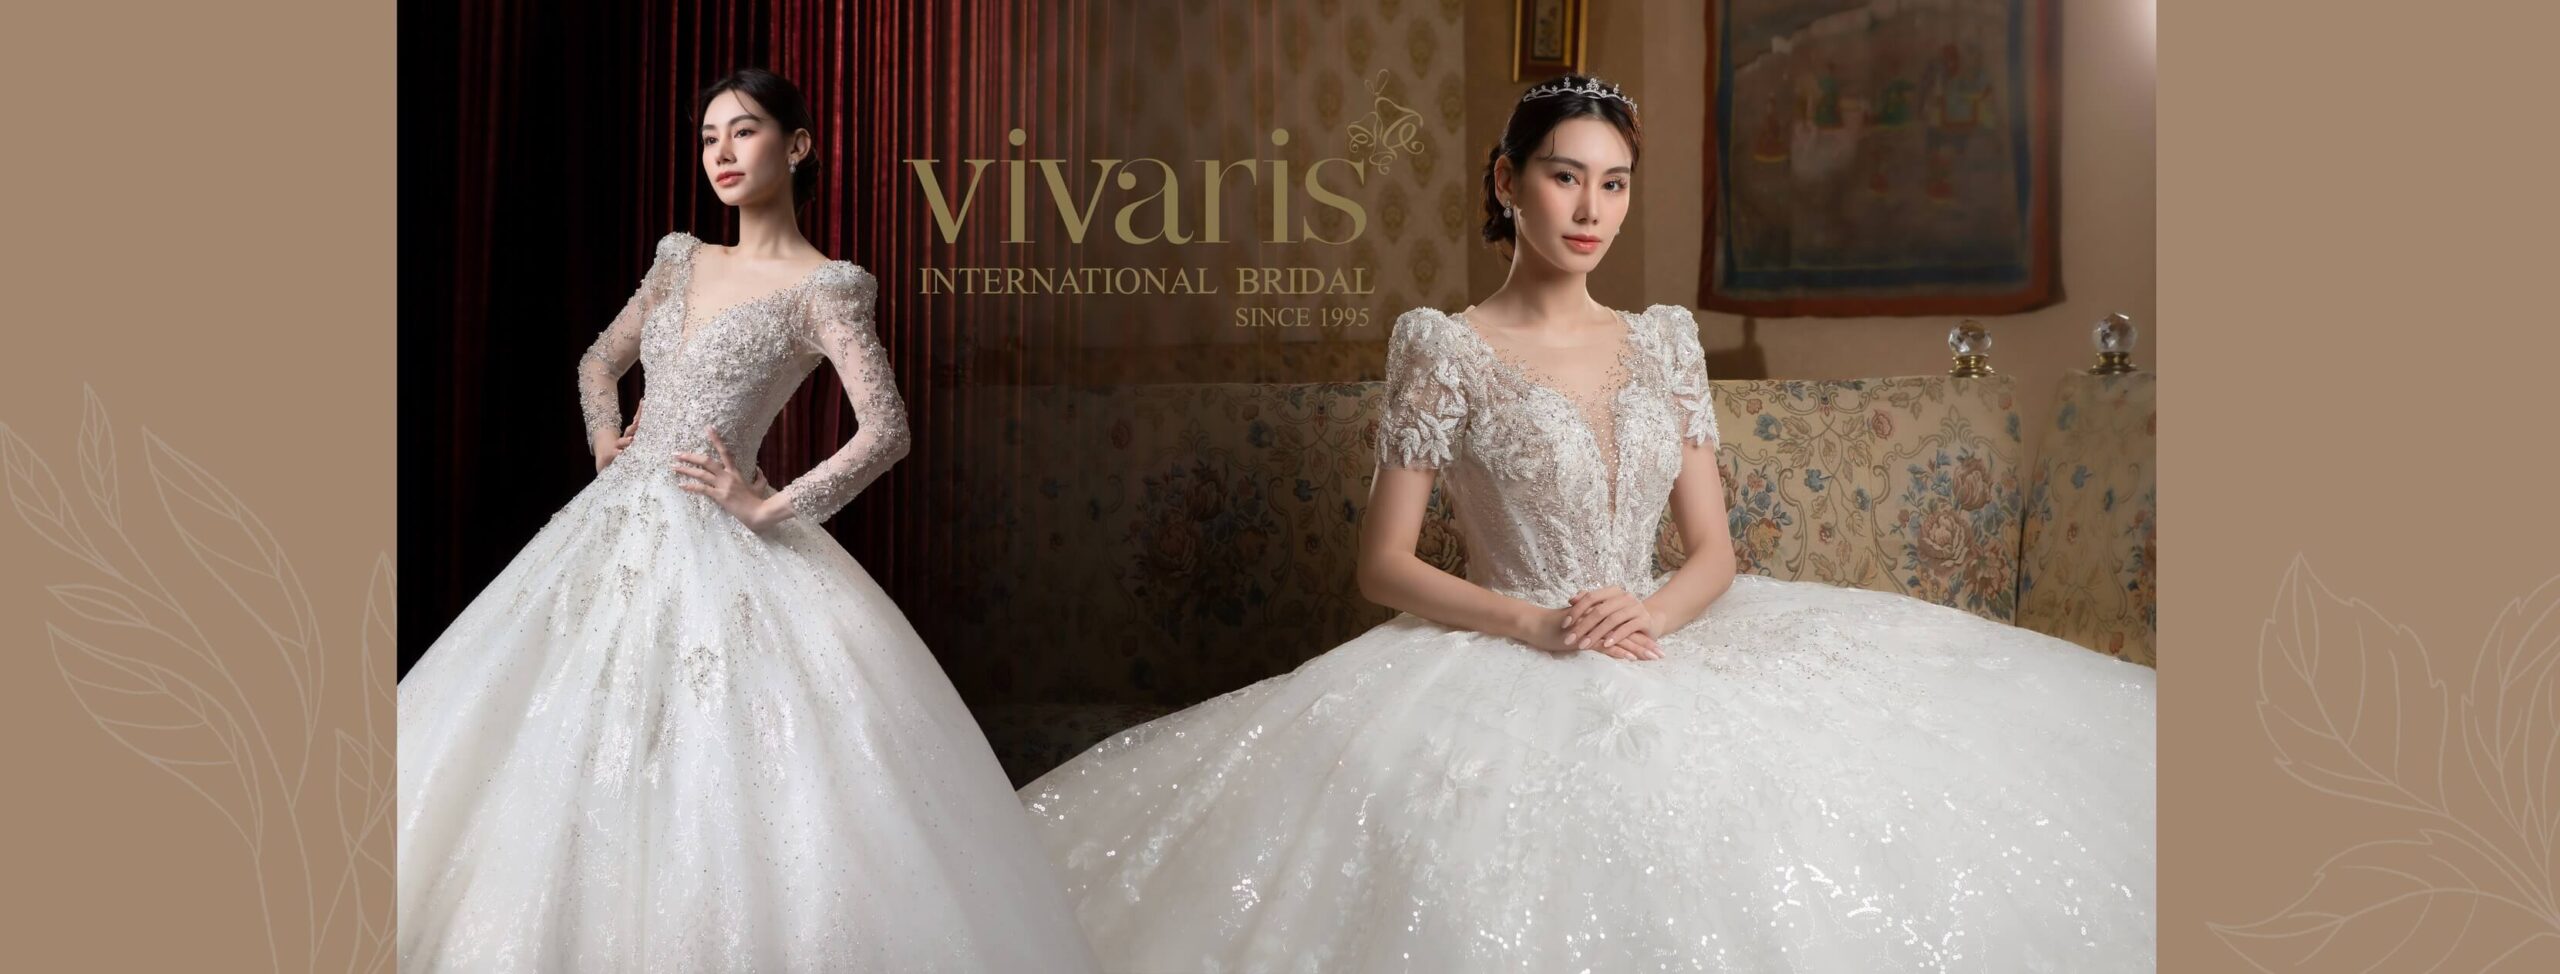 Vivaris International Bridal ชุดแต่งงาน ชุดเจ้าสาว ชุดไทย